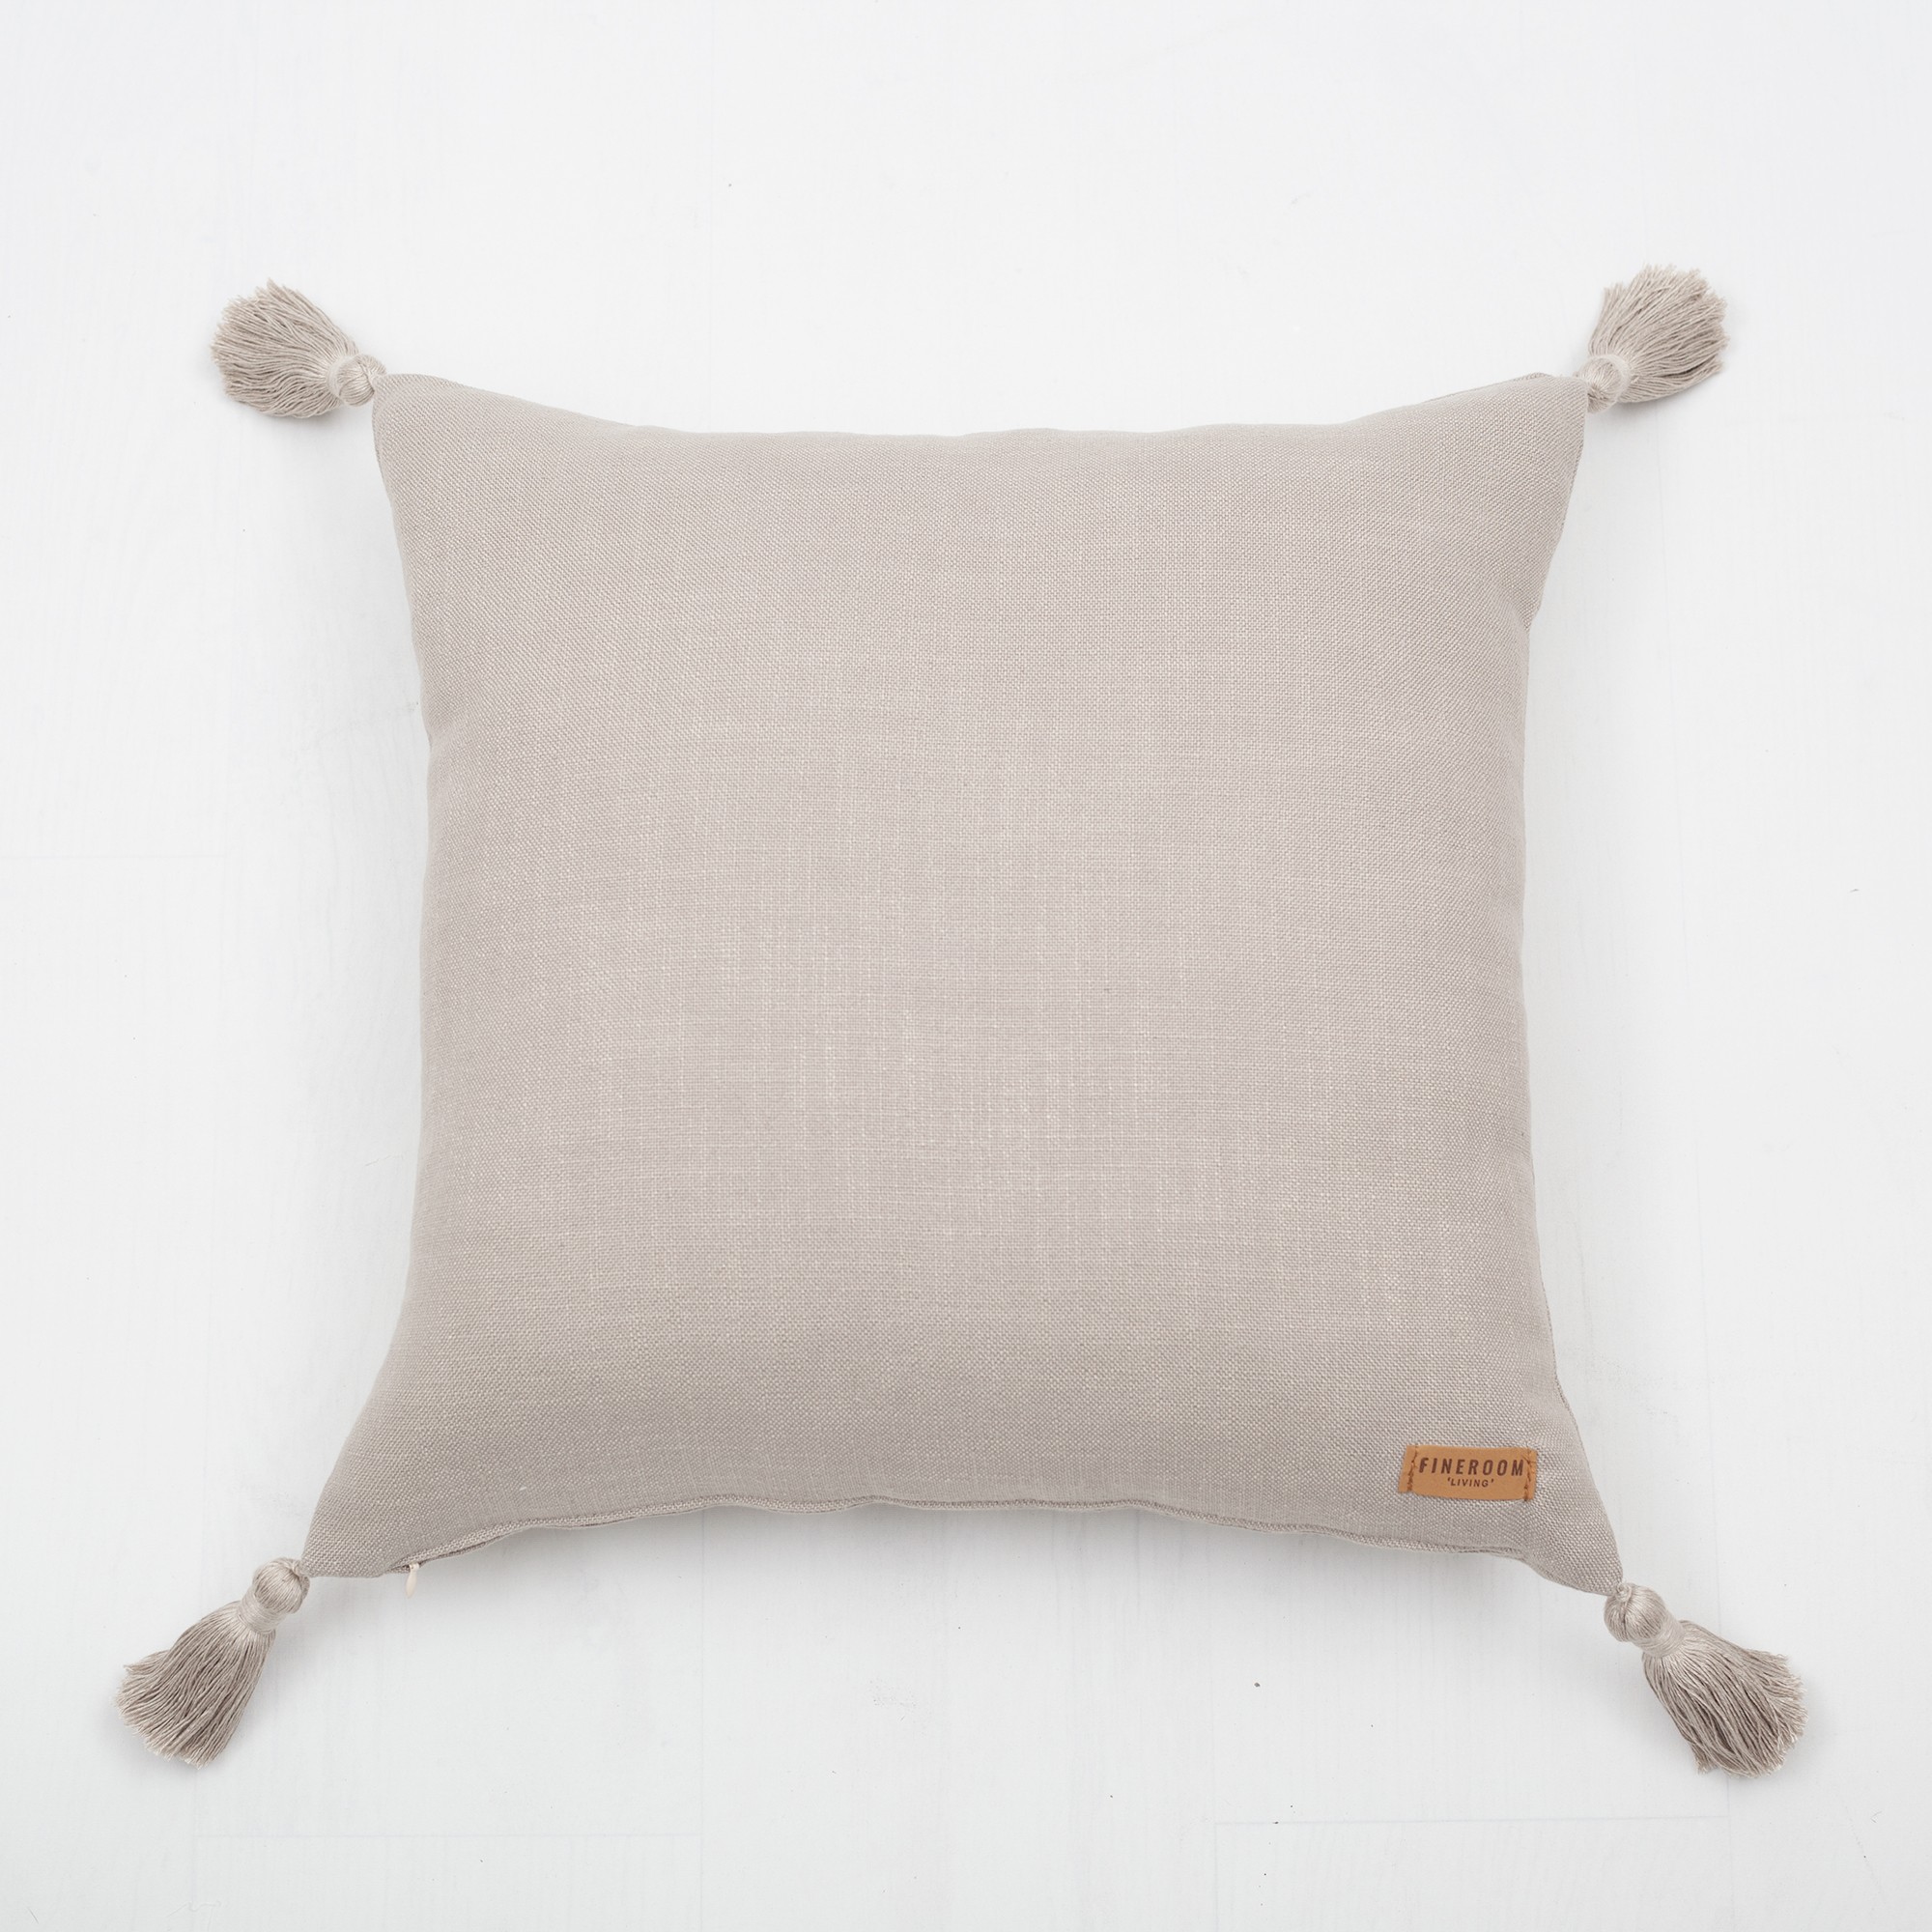 "Loom" - Viscose Linen 100% Natural Tasseled 20x20 Inch Pillow - Linen (Cover Only)